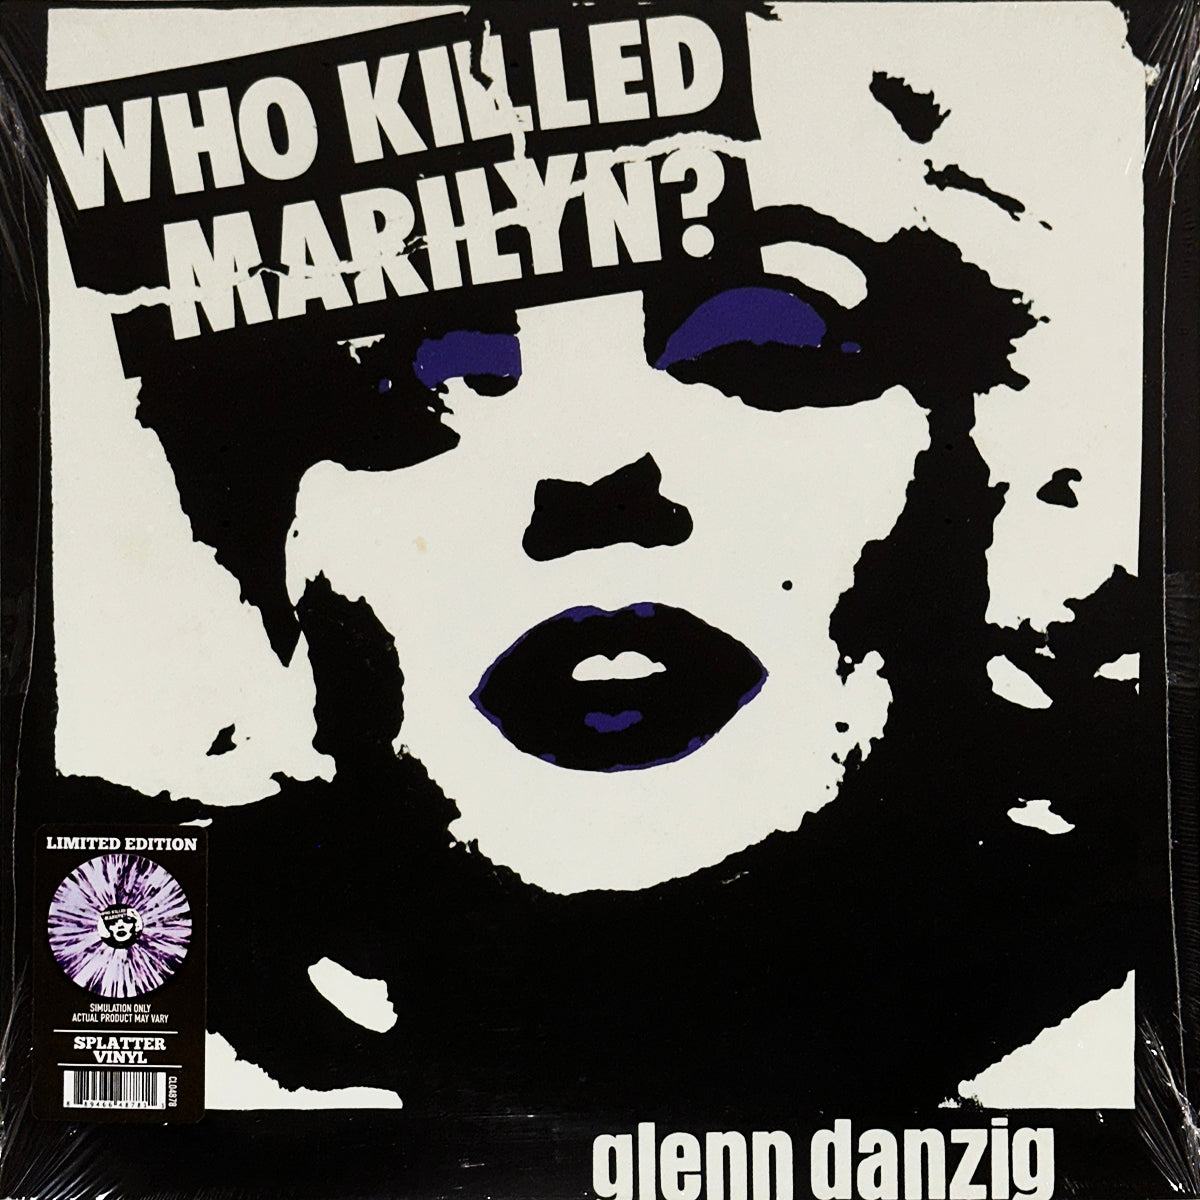 Who Killed Marilyn?